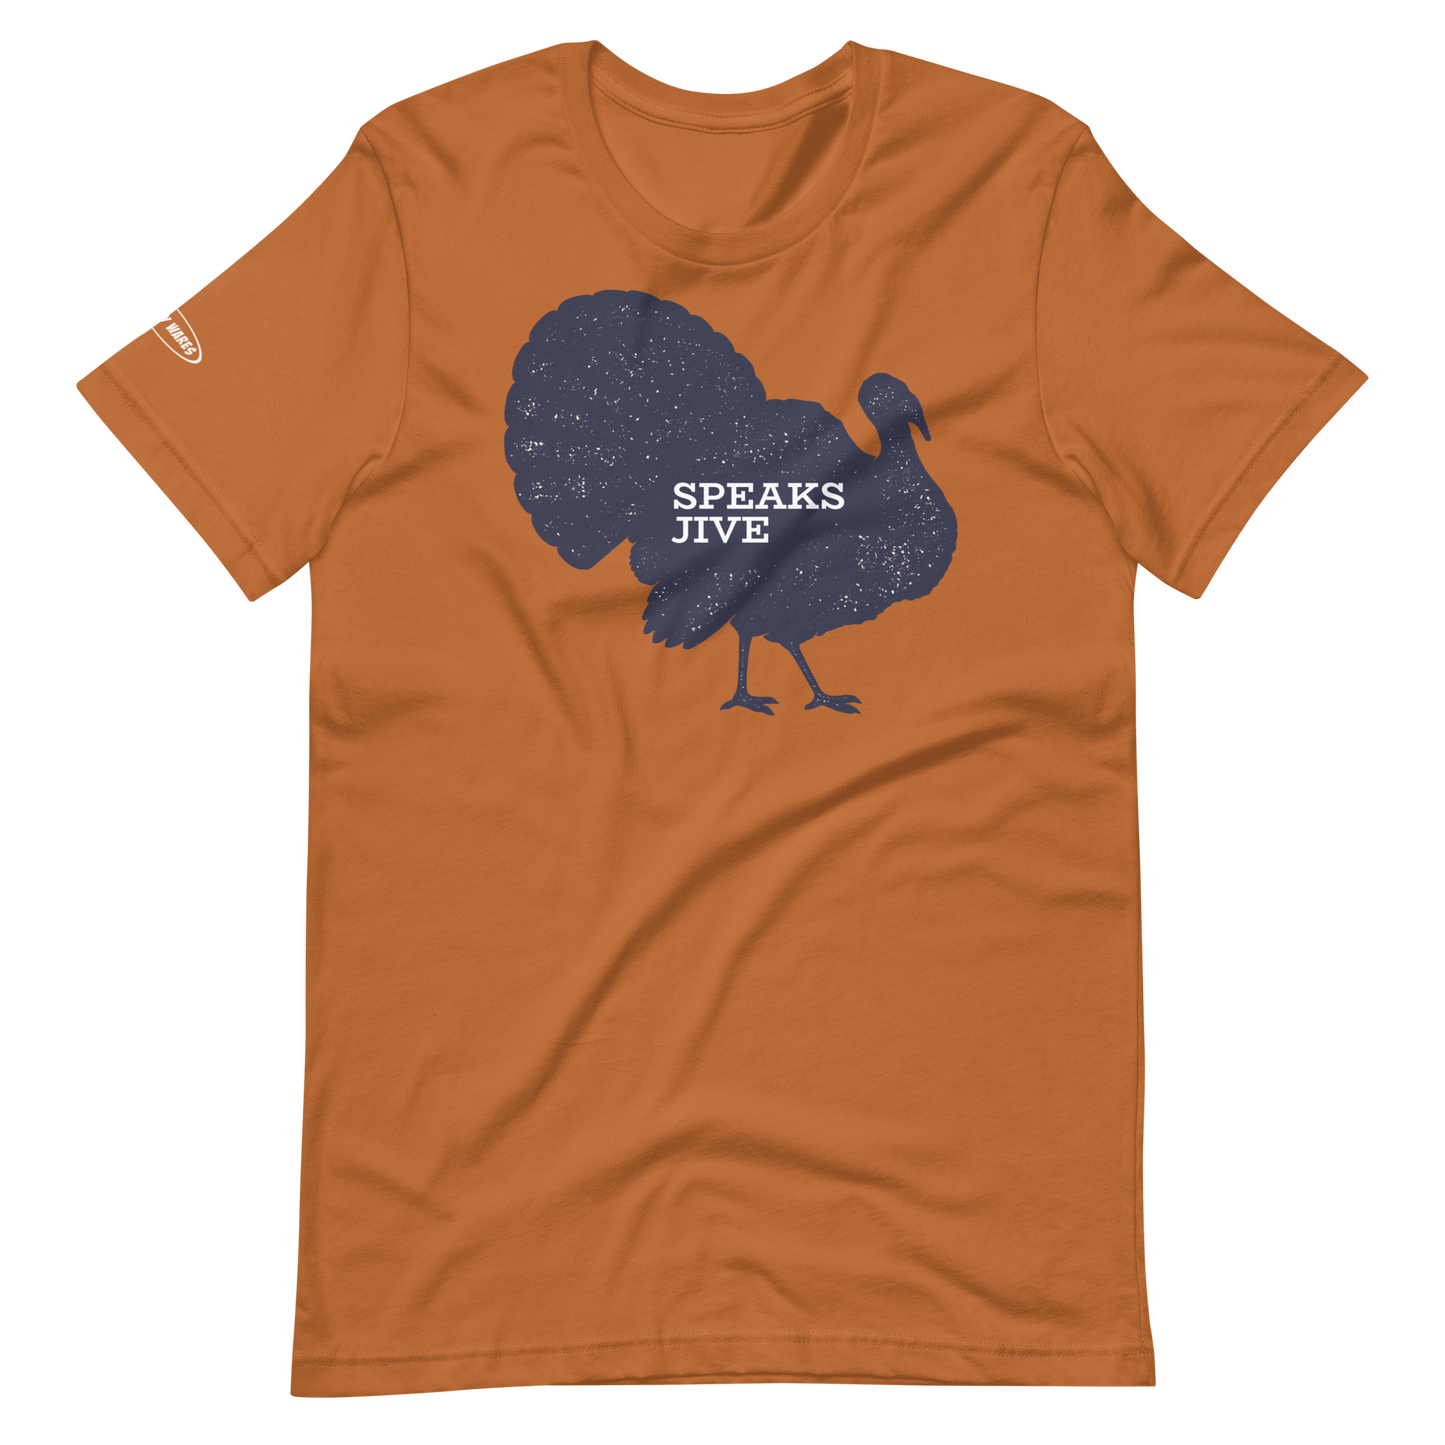 THANKSGIVING - Turkey Speaks Jive - Funny t-shirt